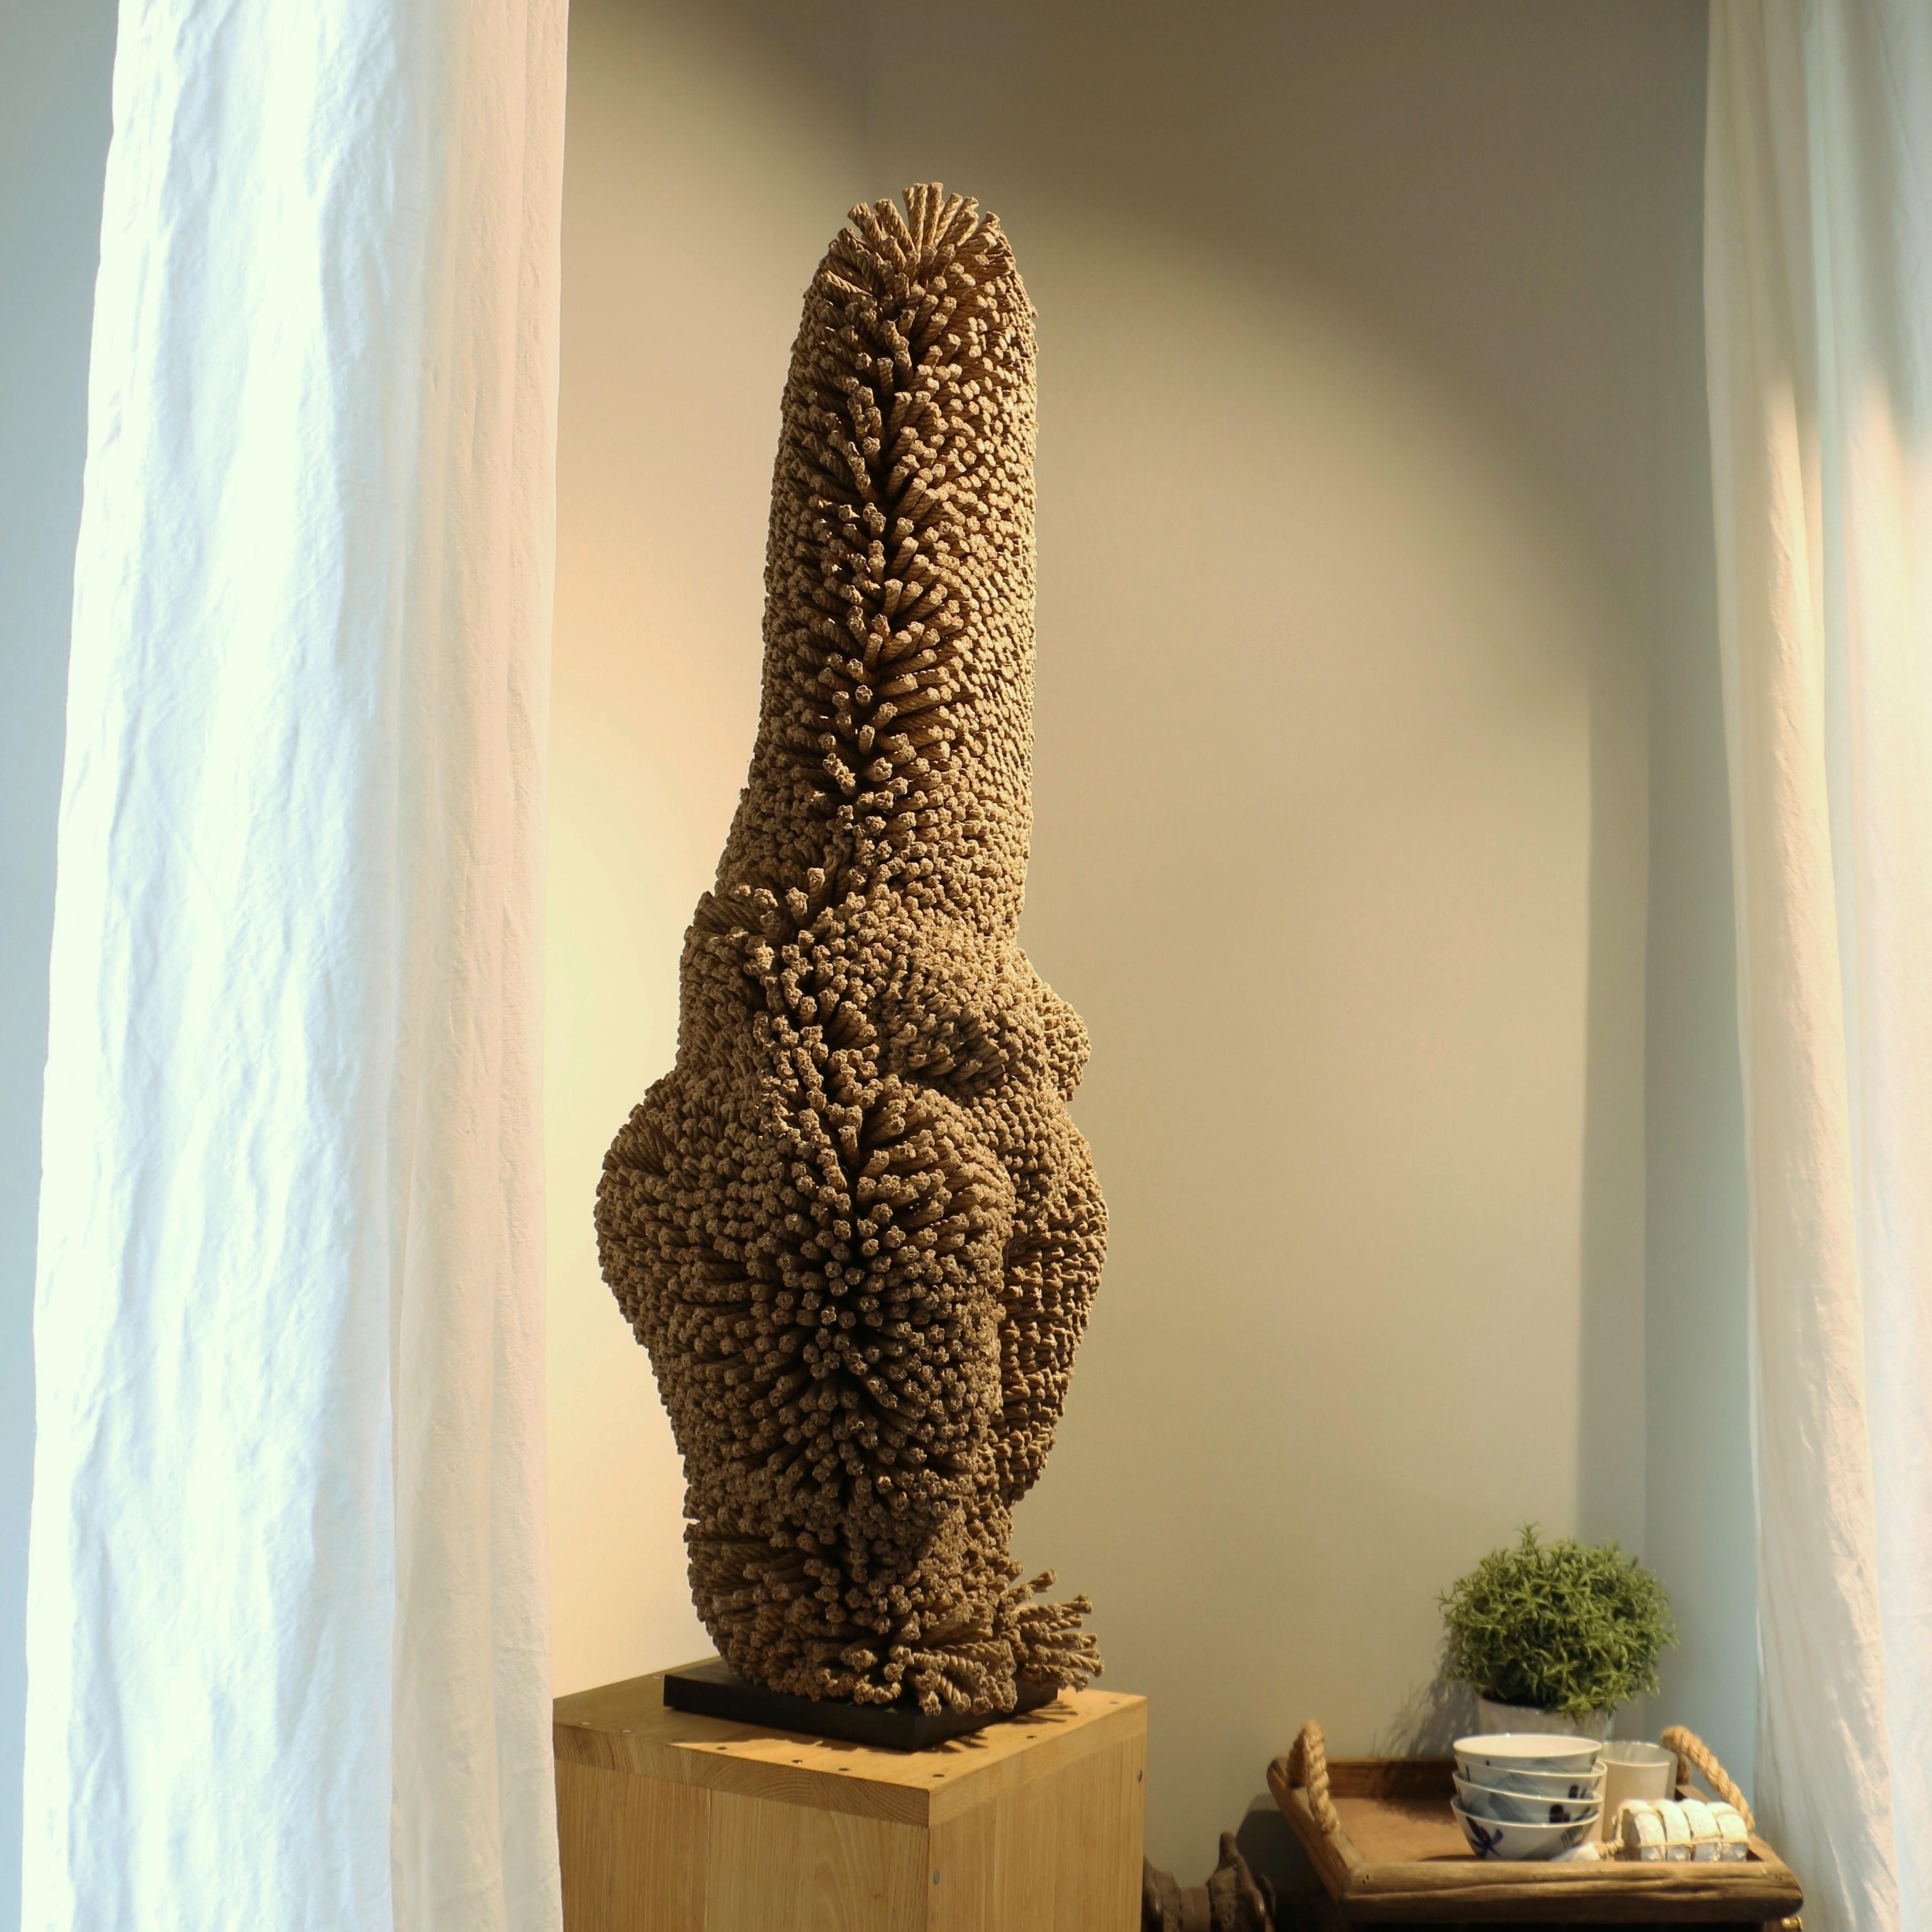 This textile sculpture untitled 